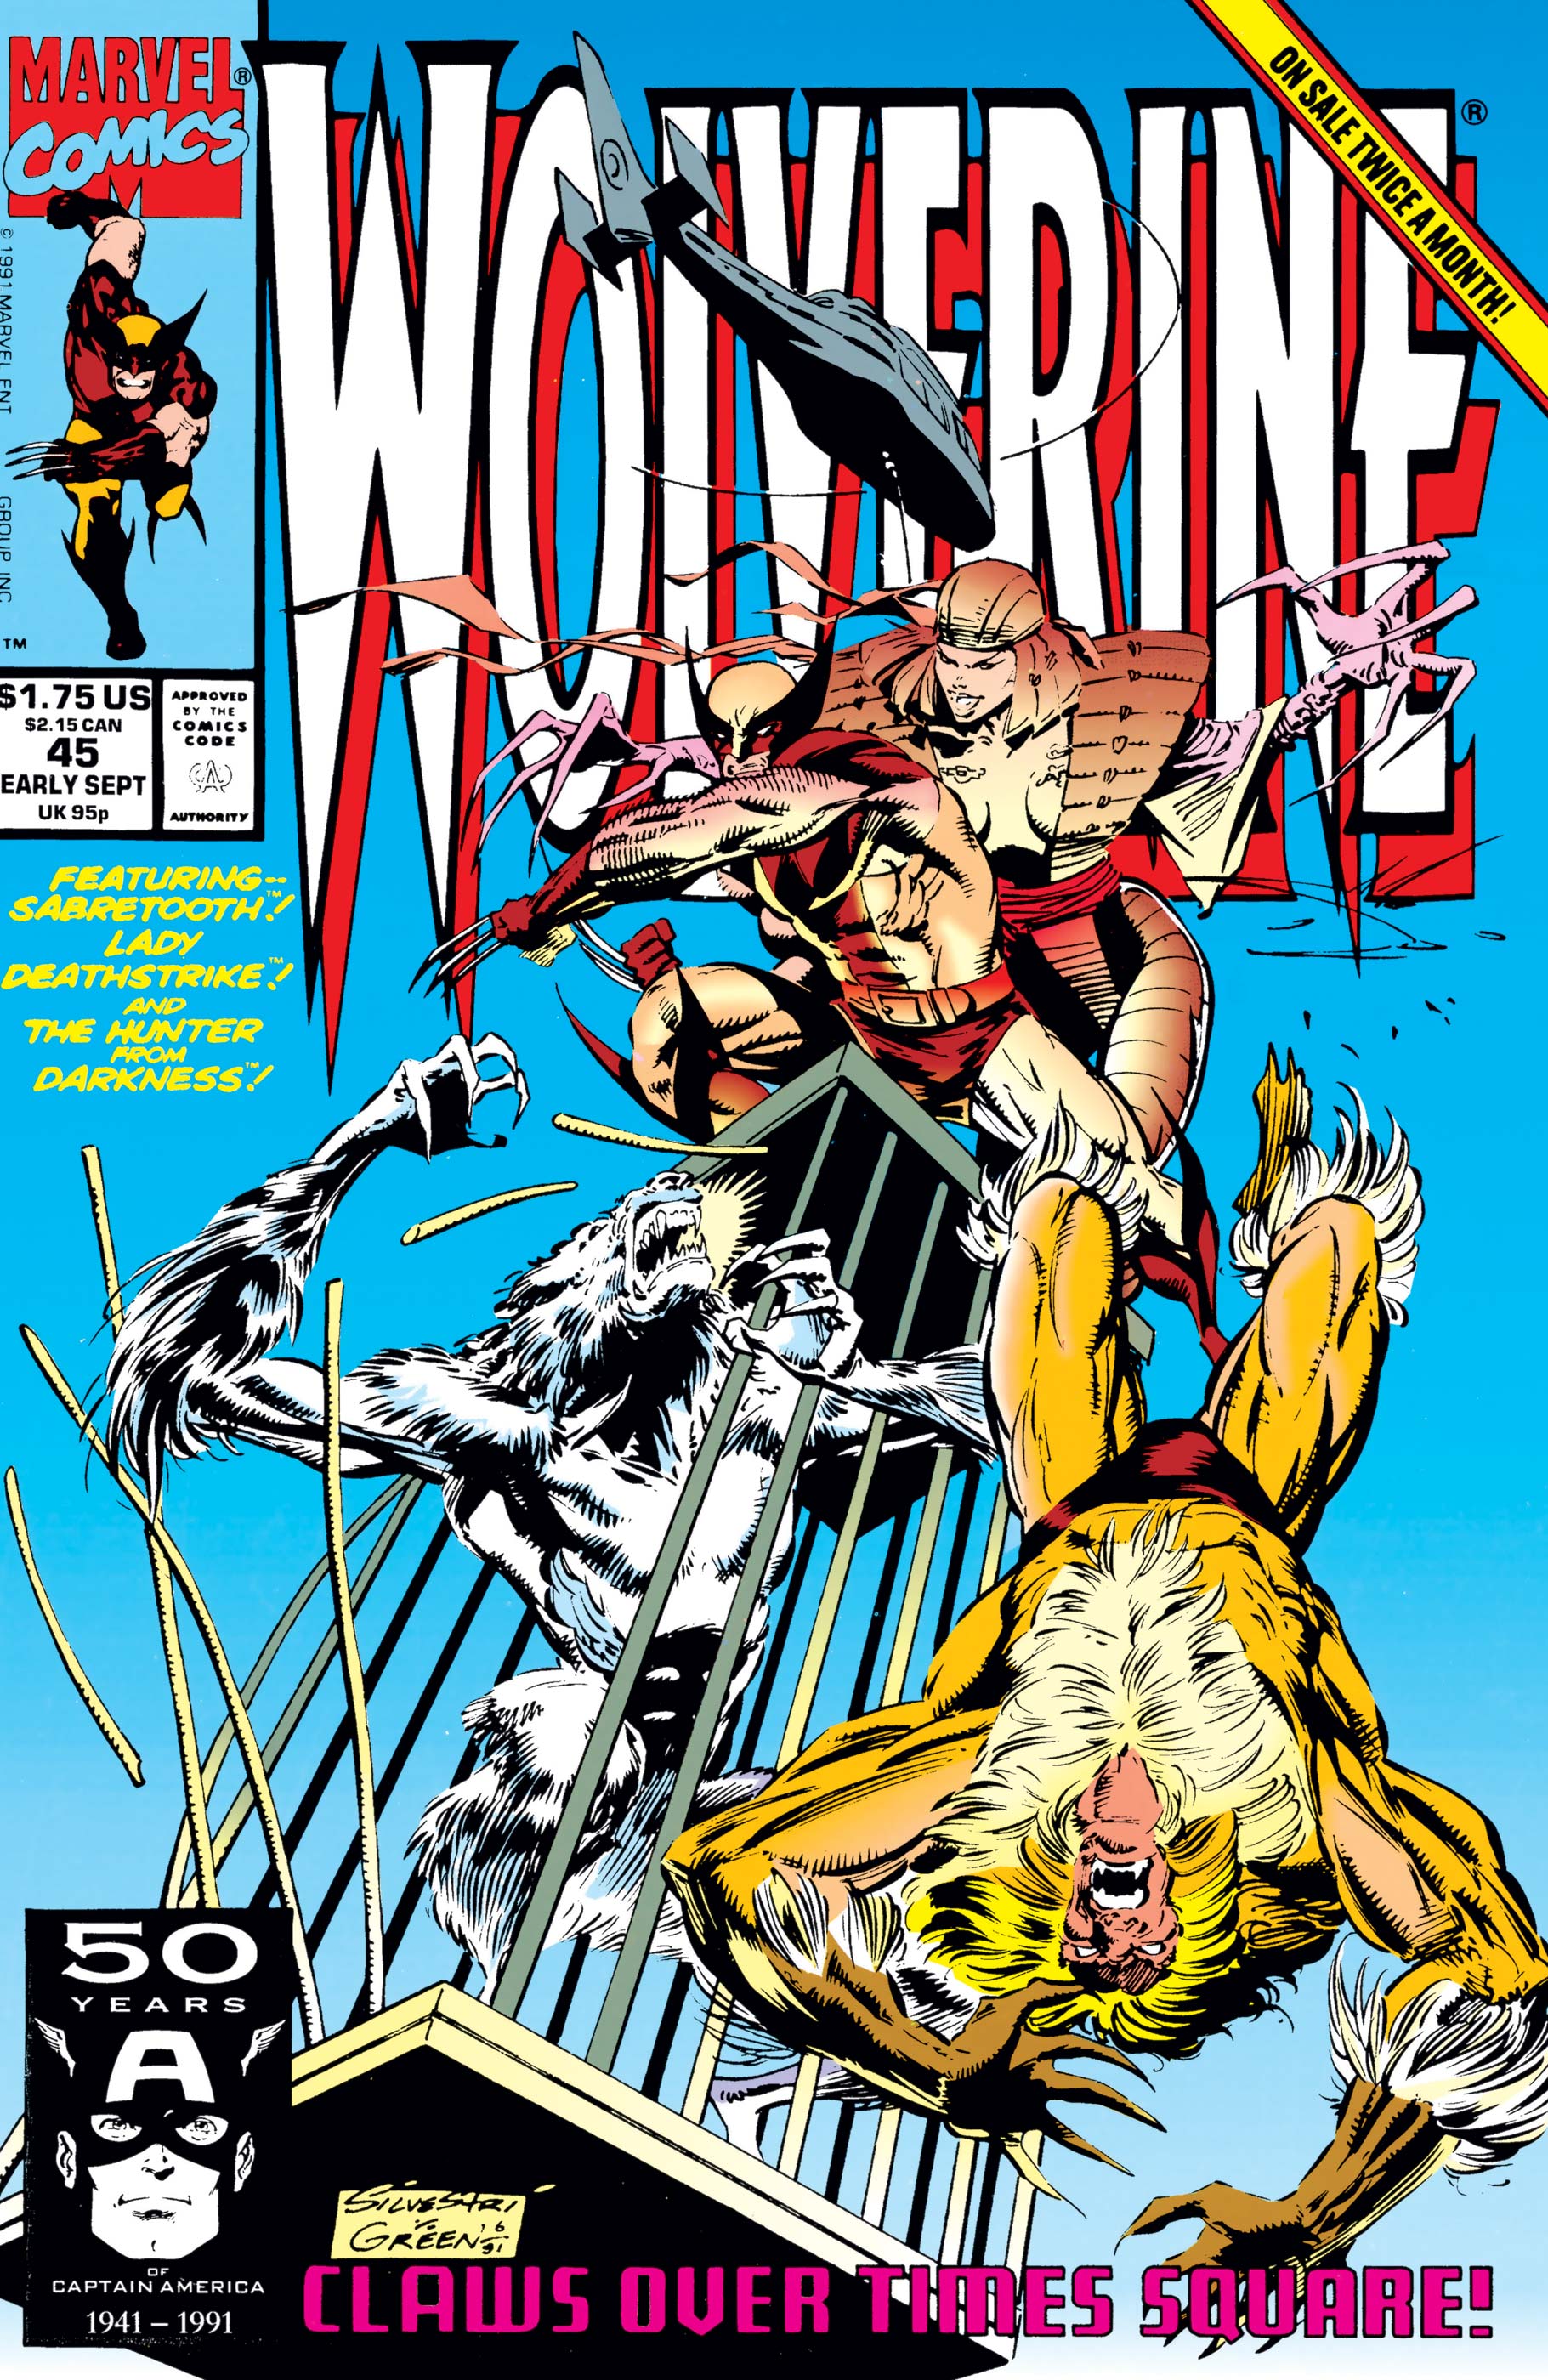 COMIC Wolverine #2 Marvel - 1st Series #188 choose your favorite 